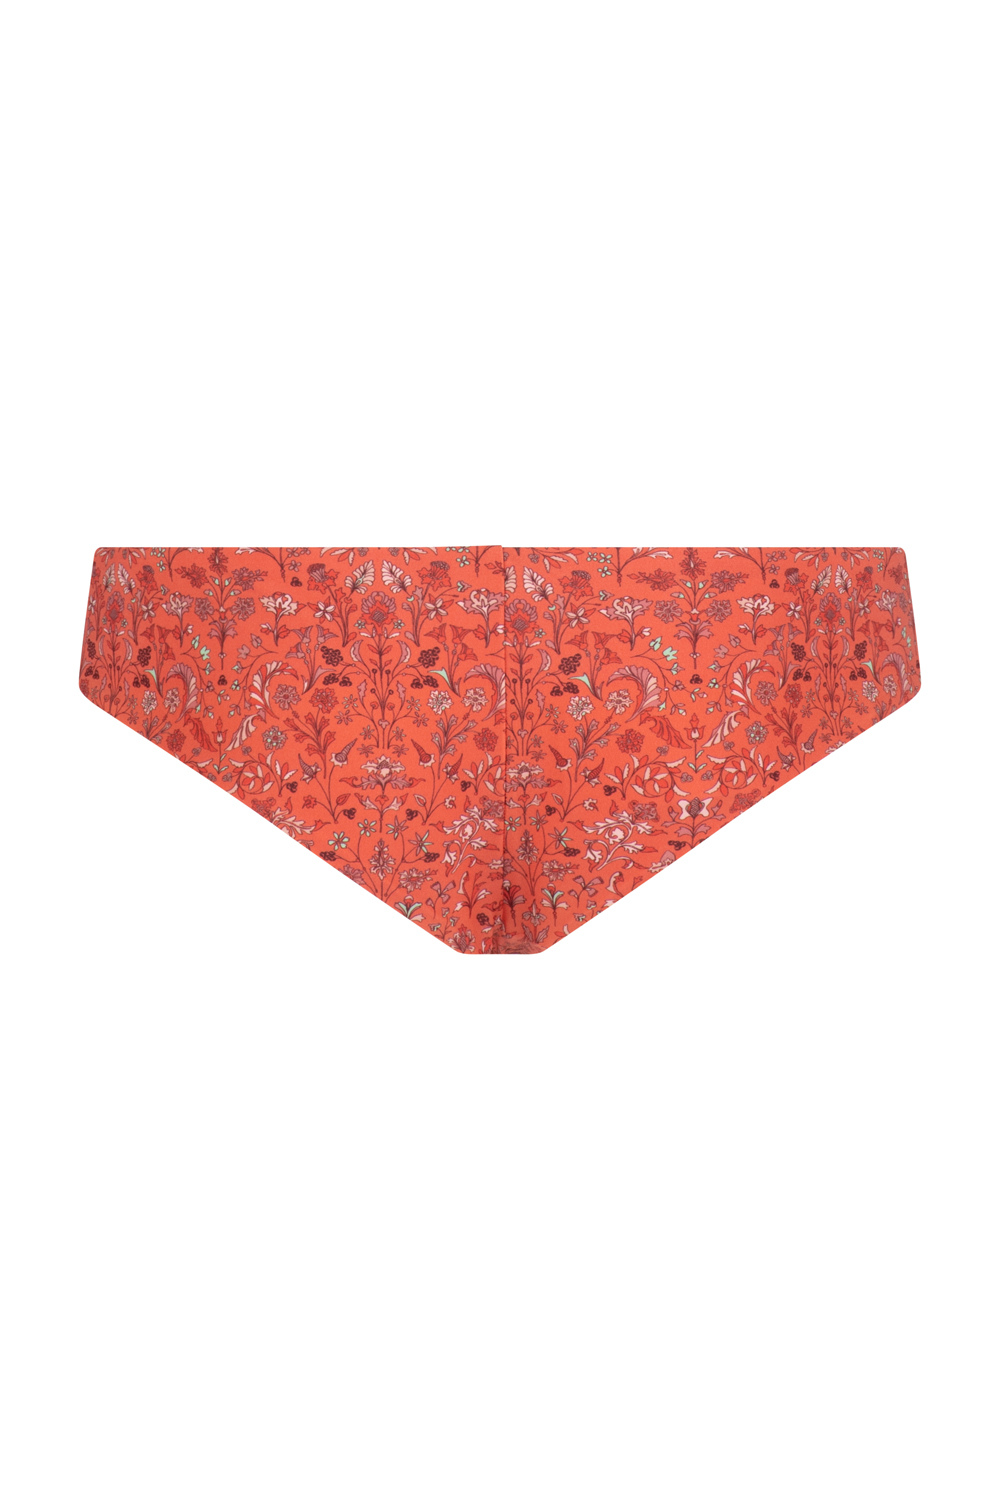 Alexandria Zehra Bikini Bottom Reversible - Raspberry/Orange Floral